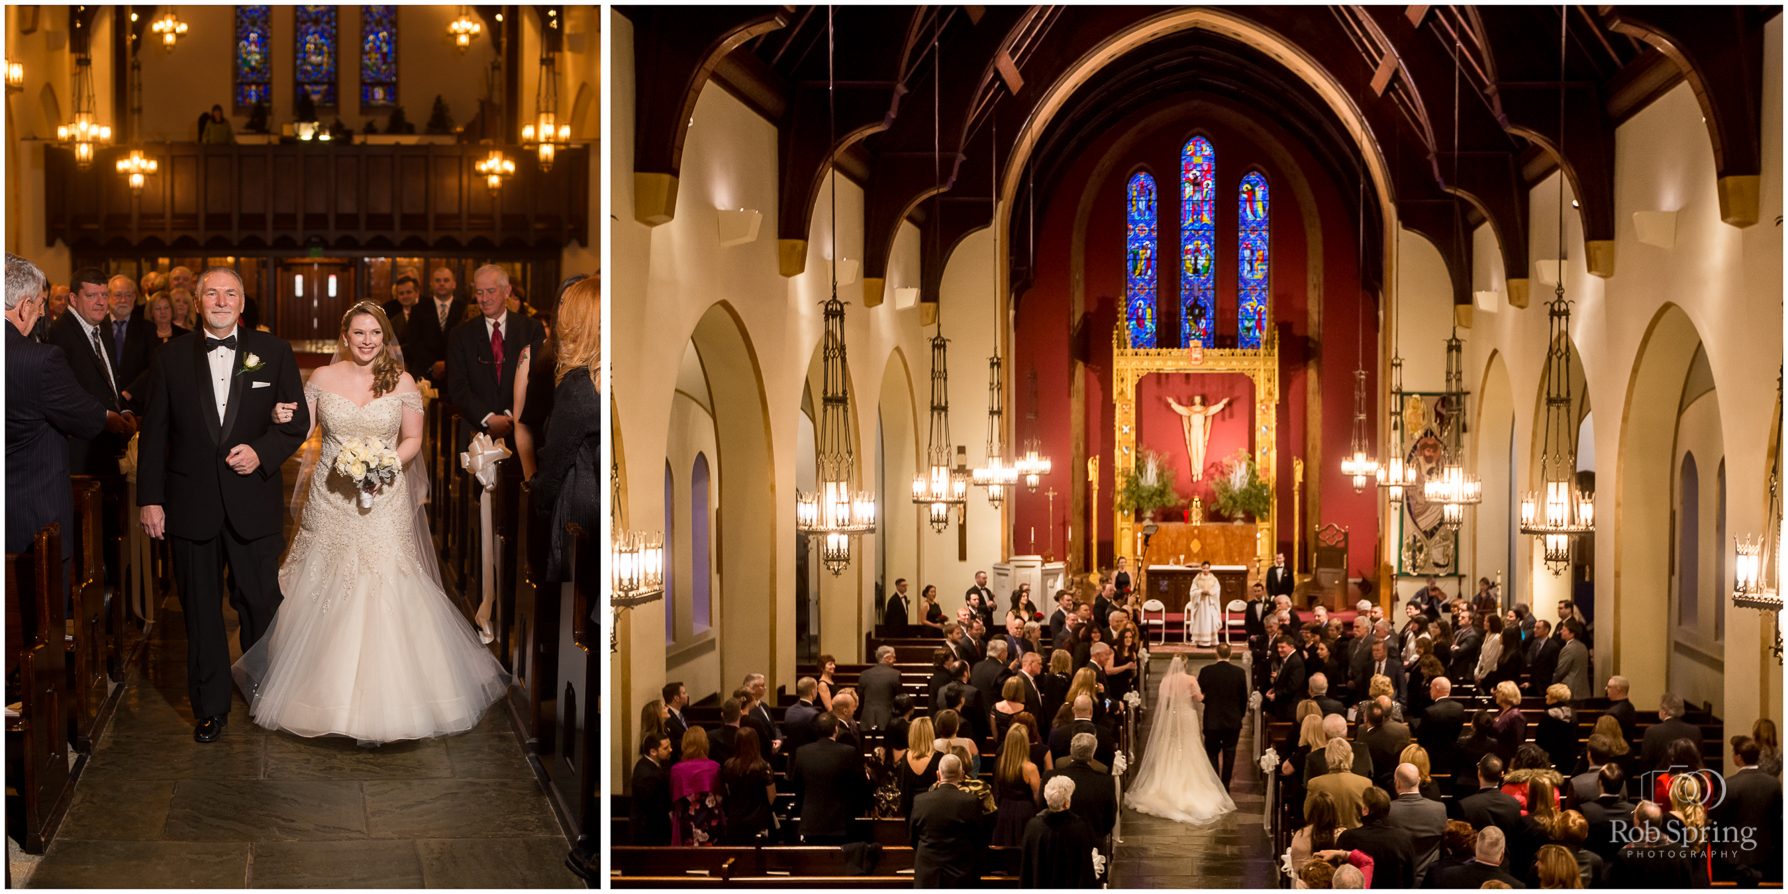 Beautiful church wedding | Glen Sanders Mansion Wedding photographer